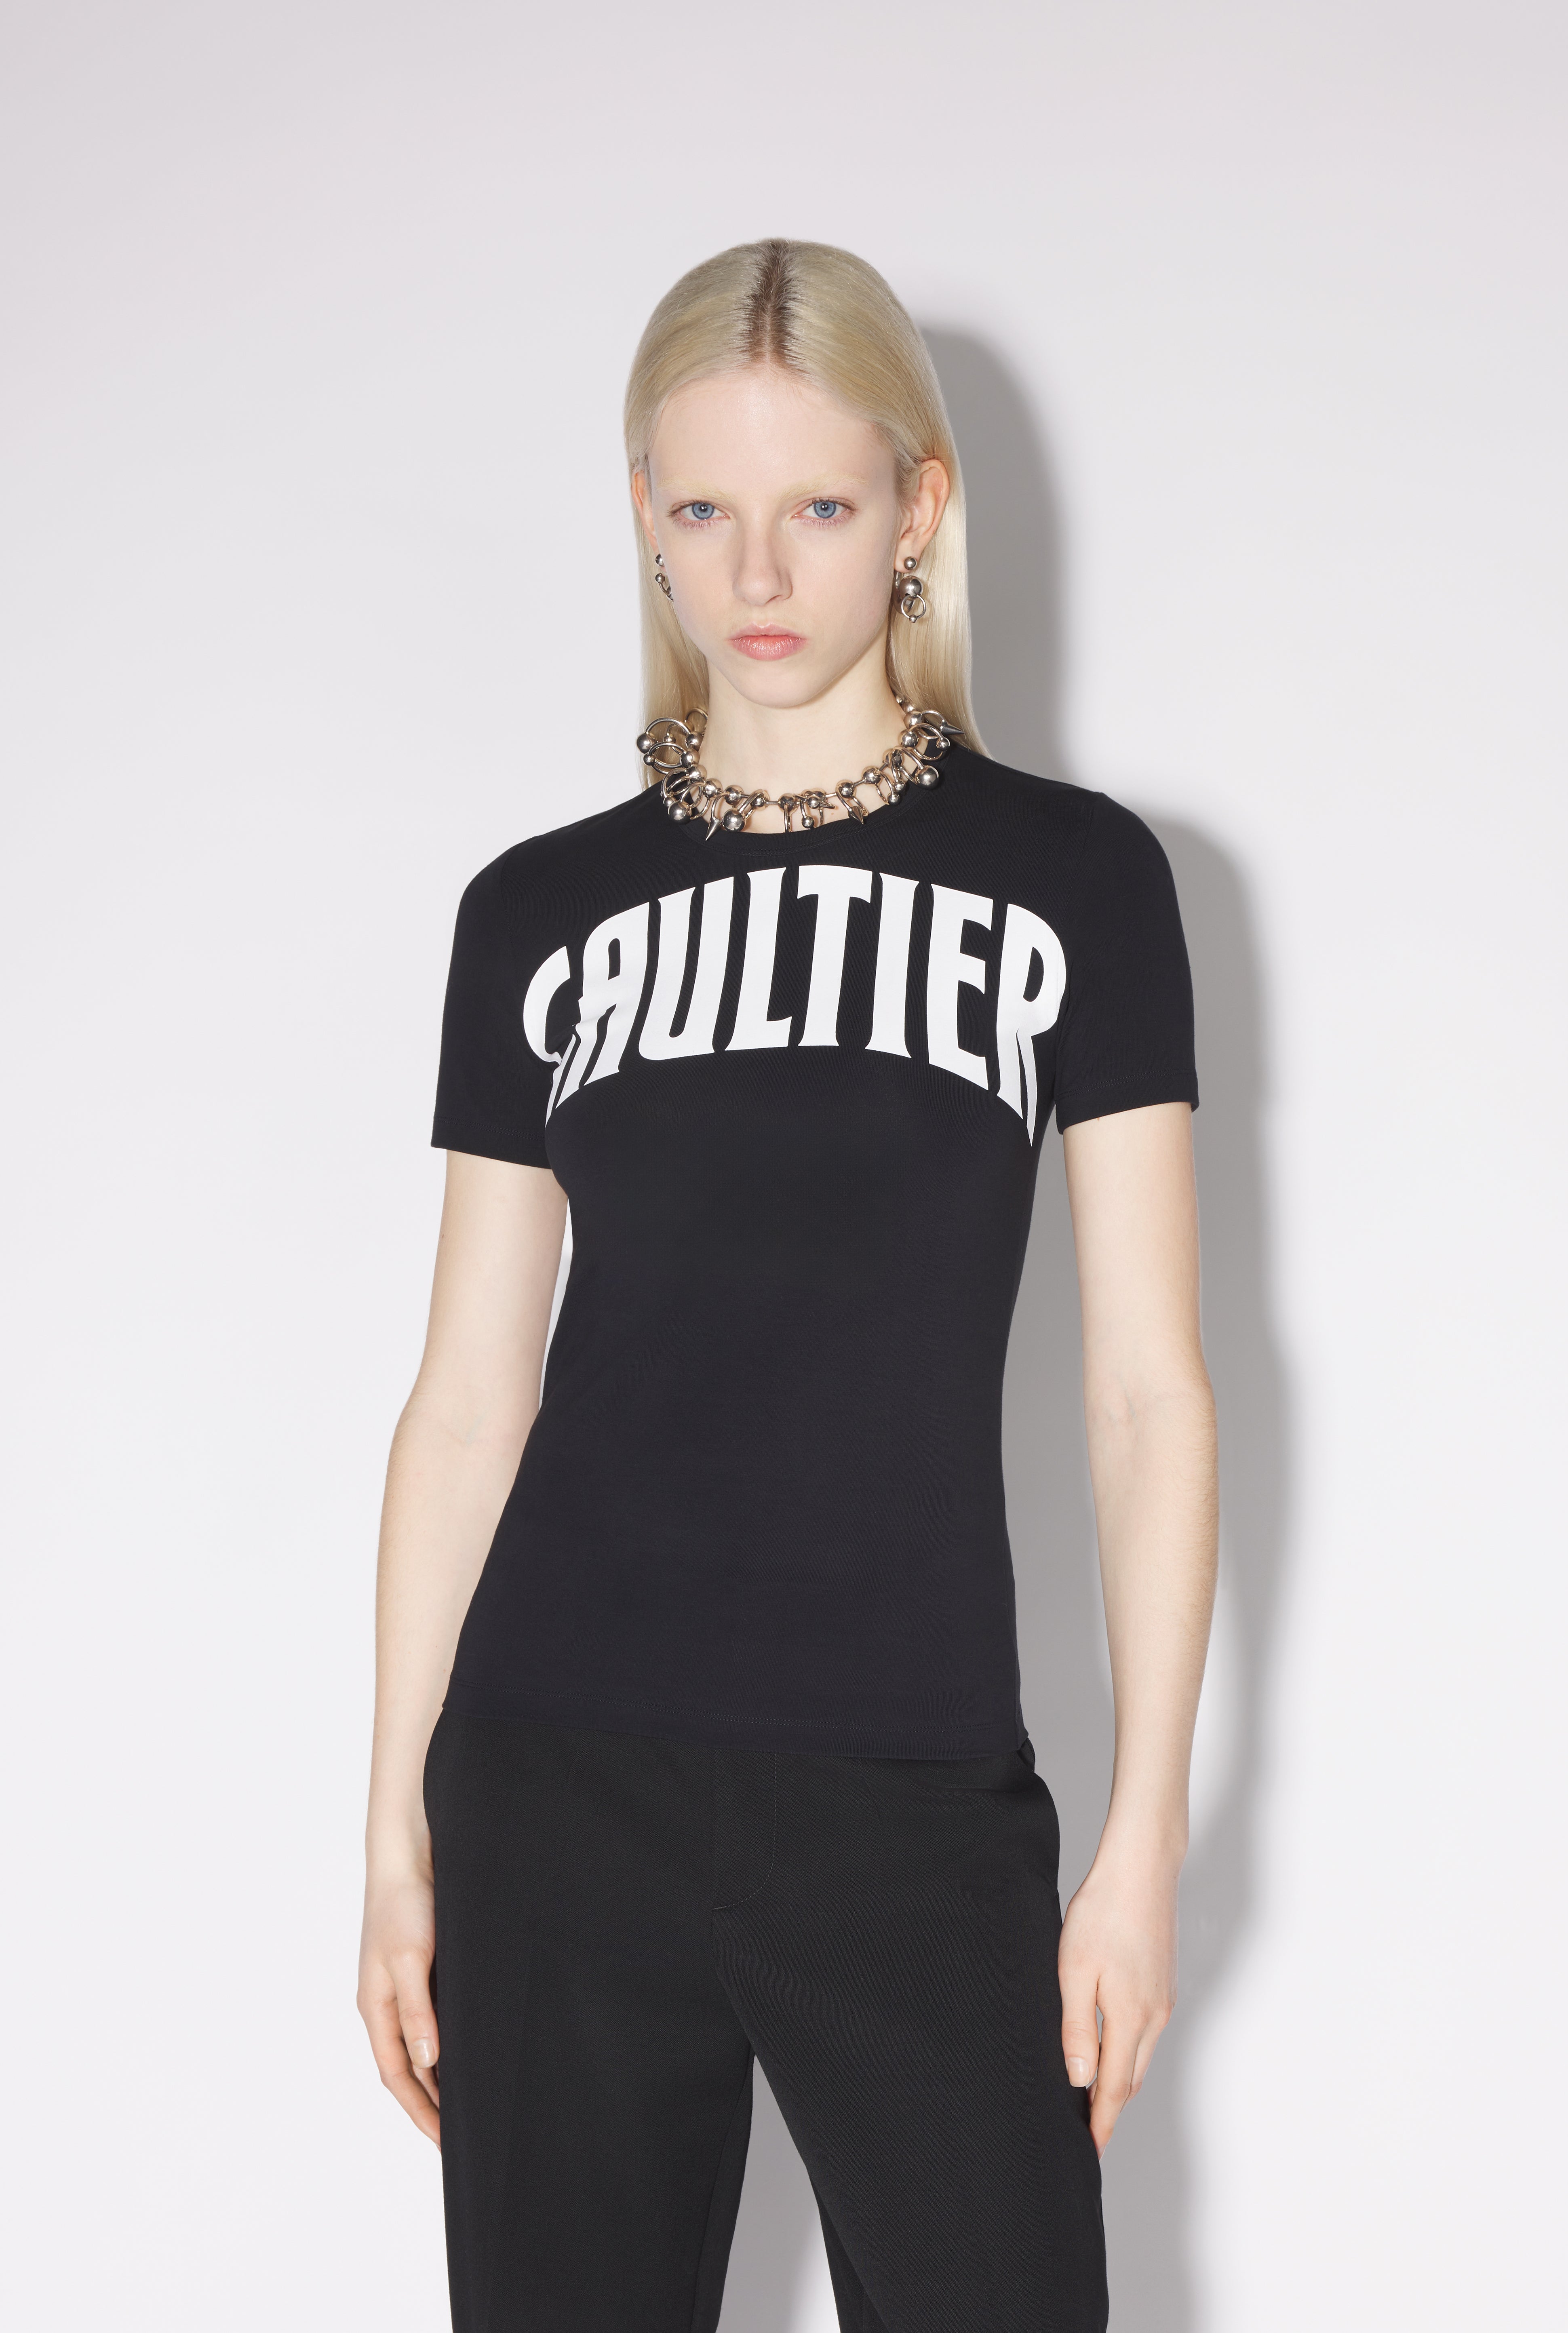 Jean Paul Gaultier - T-shirts and Sweatshirts | Jean Paul Gaultier